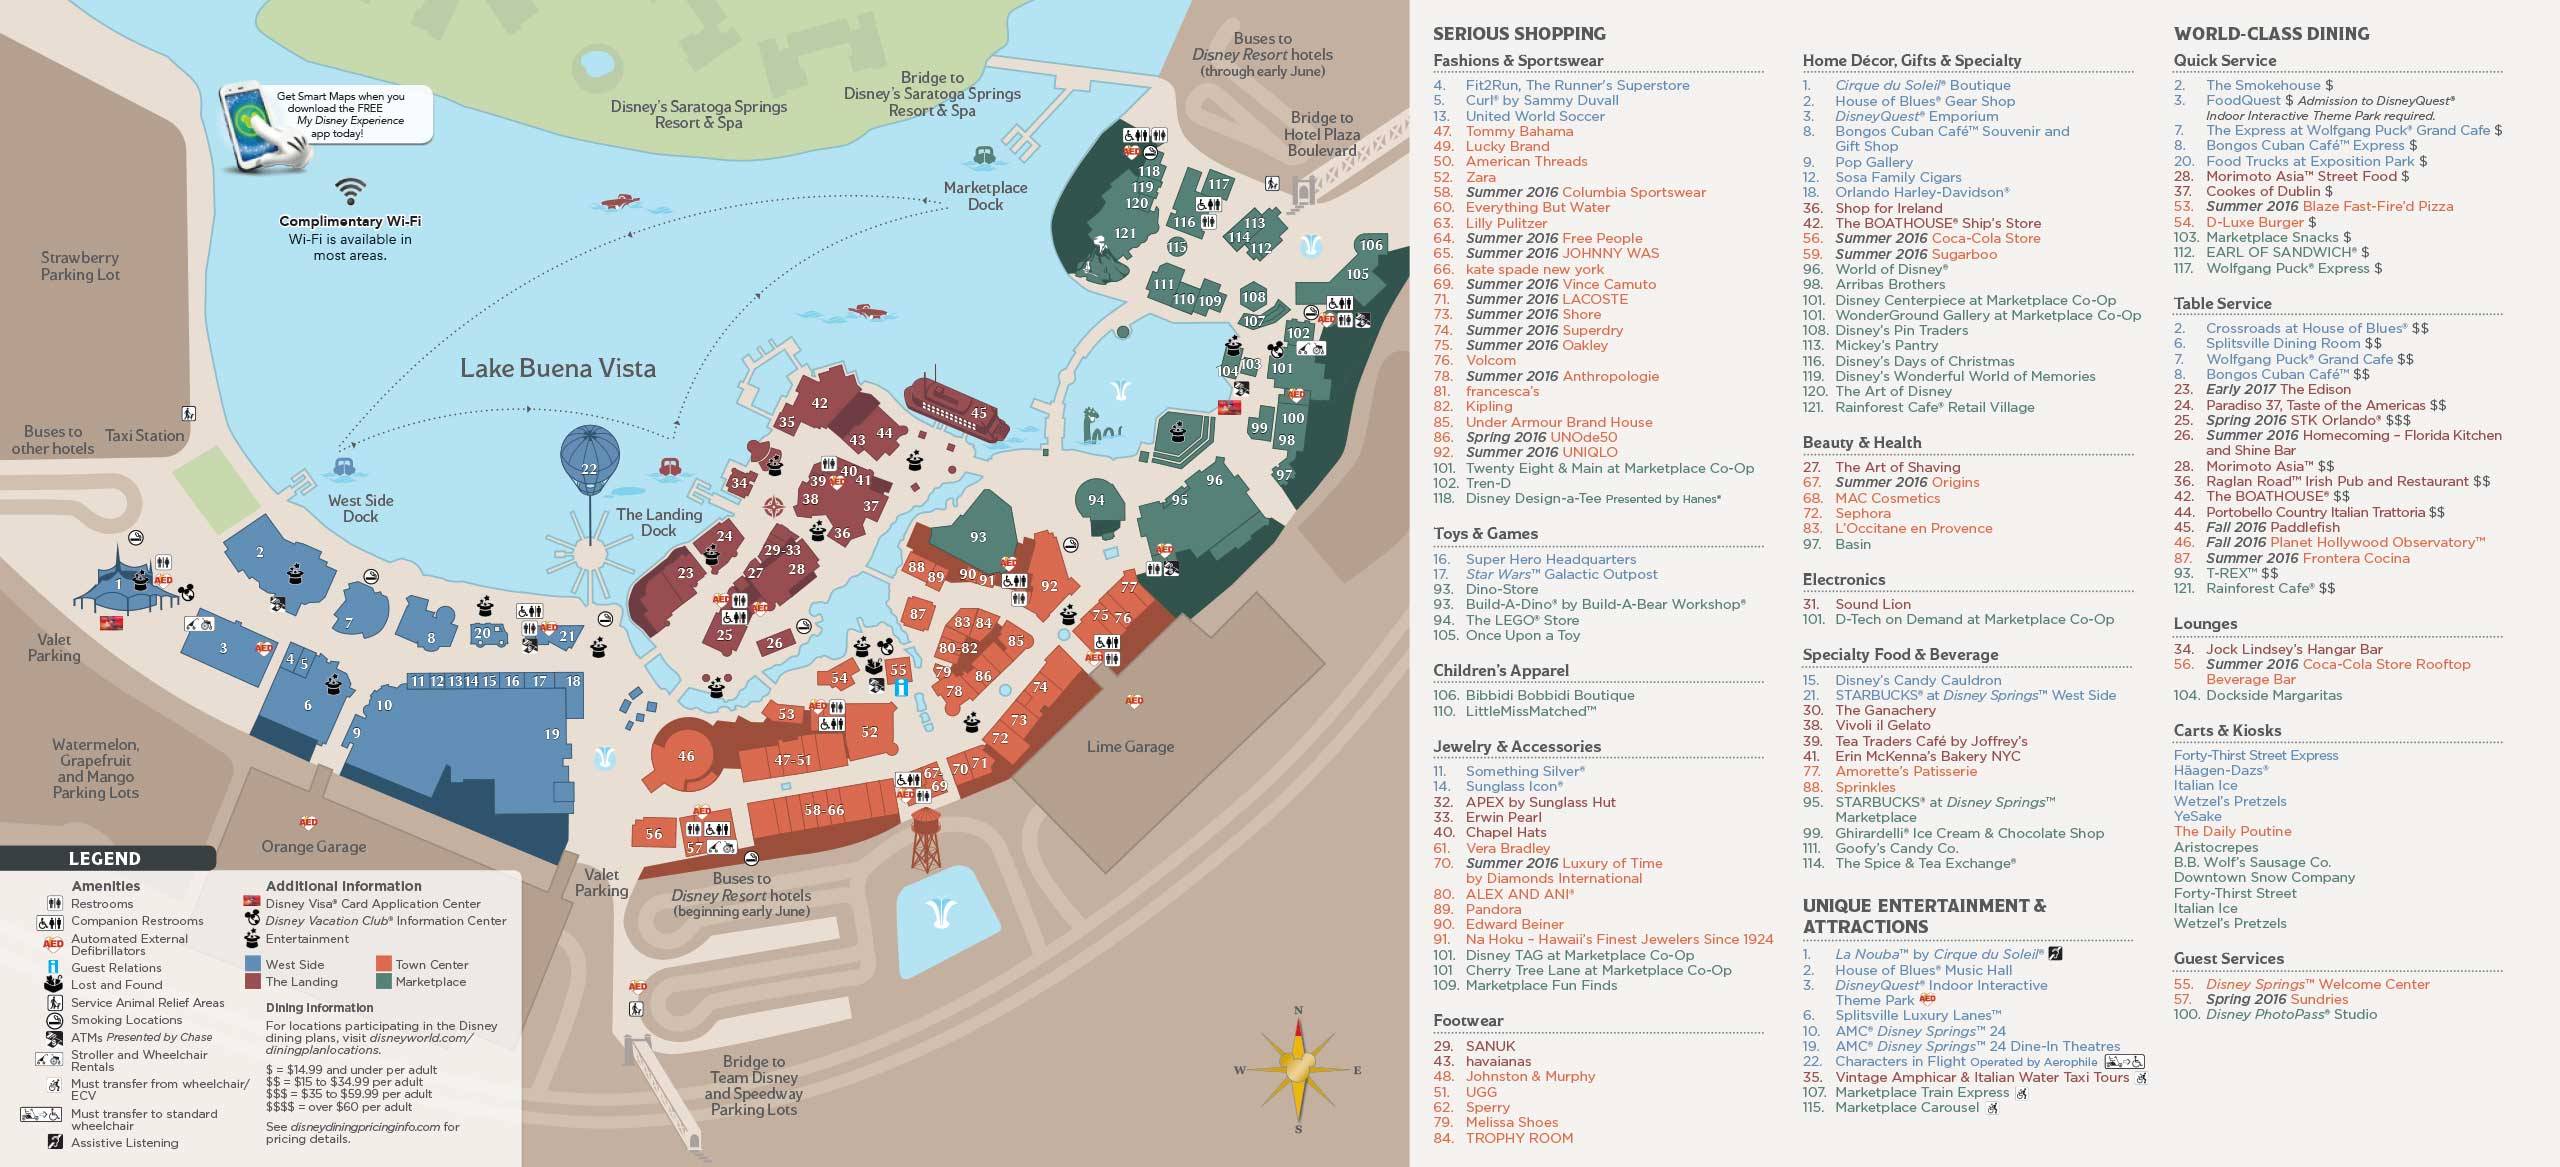 Disney Springs Guide Map May 2016 - Back